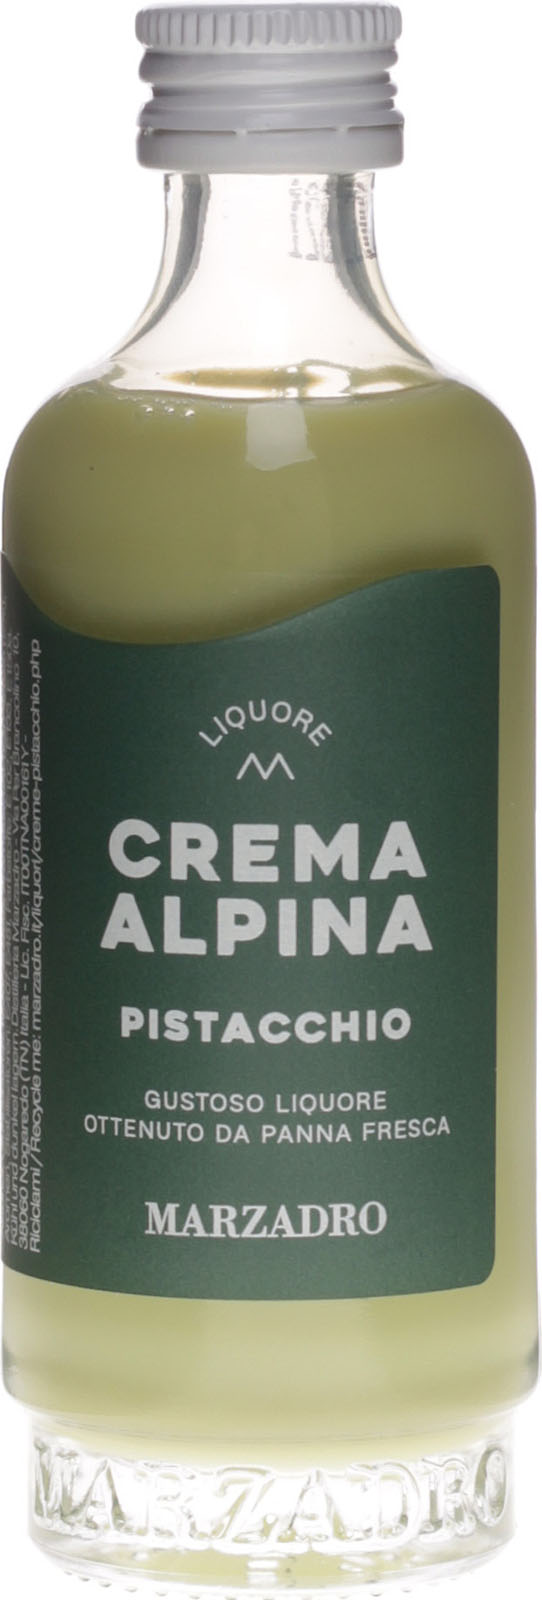 Marzadro Crema Alpina Pistacchio 0,05 Liter bei uns